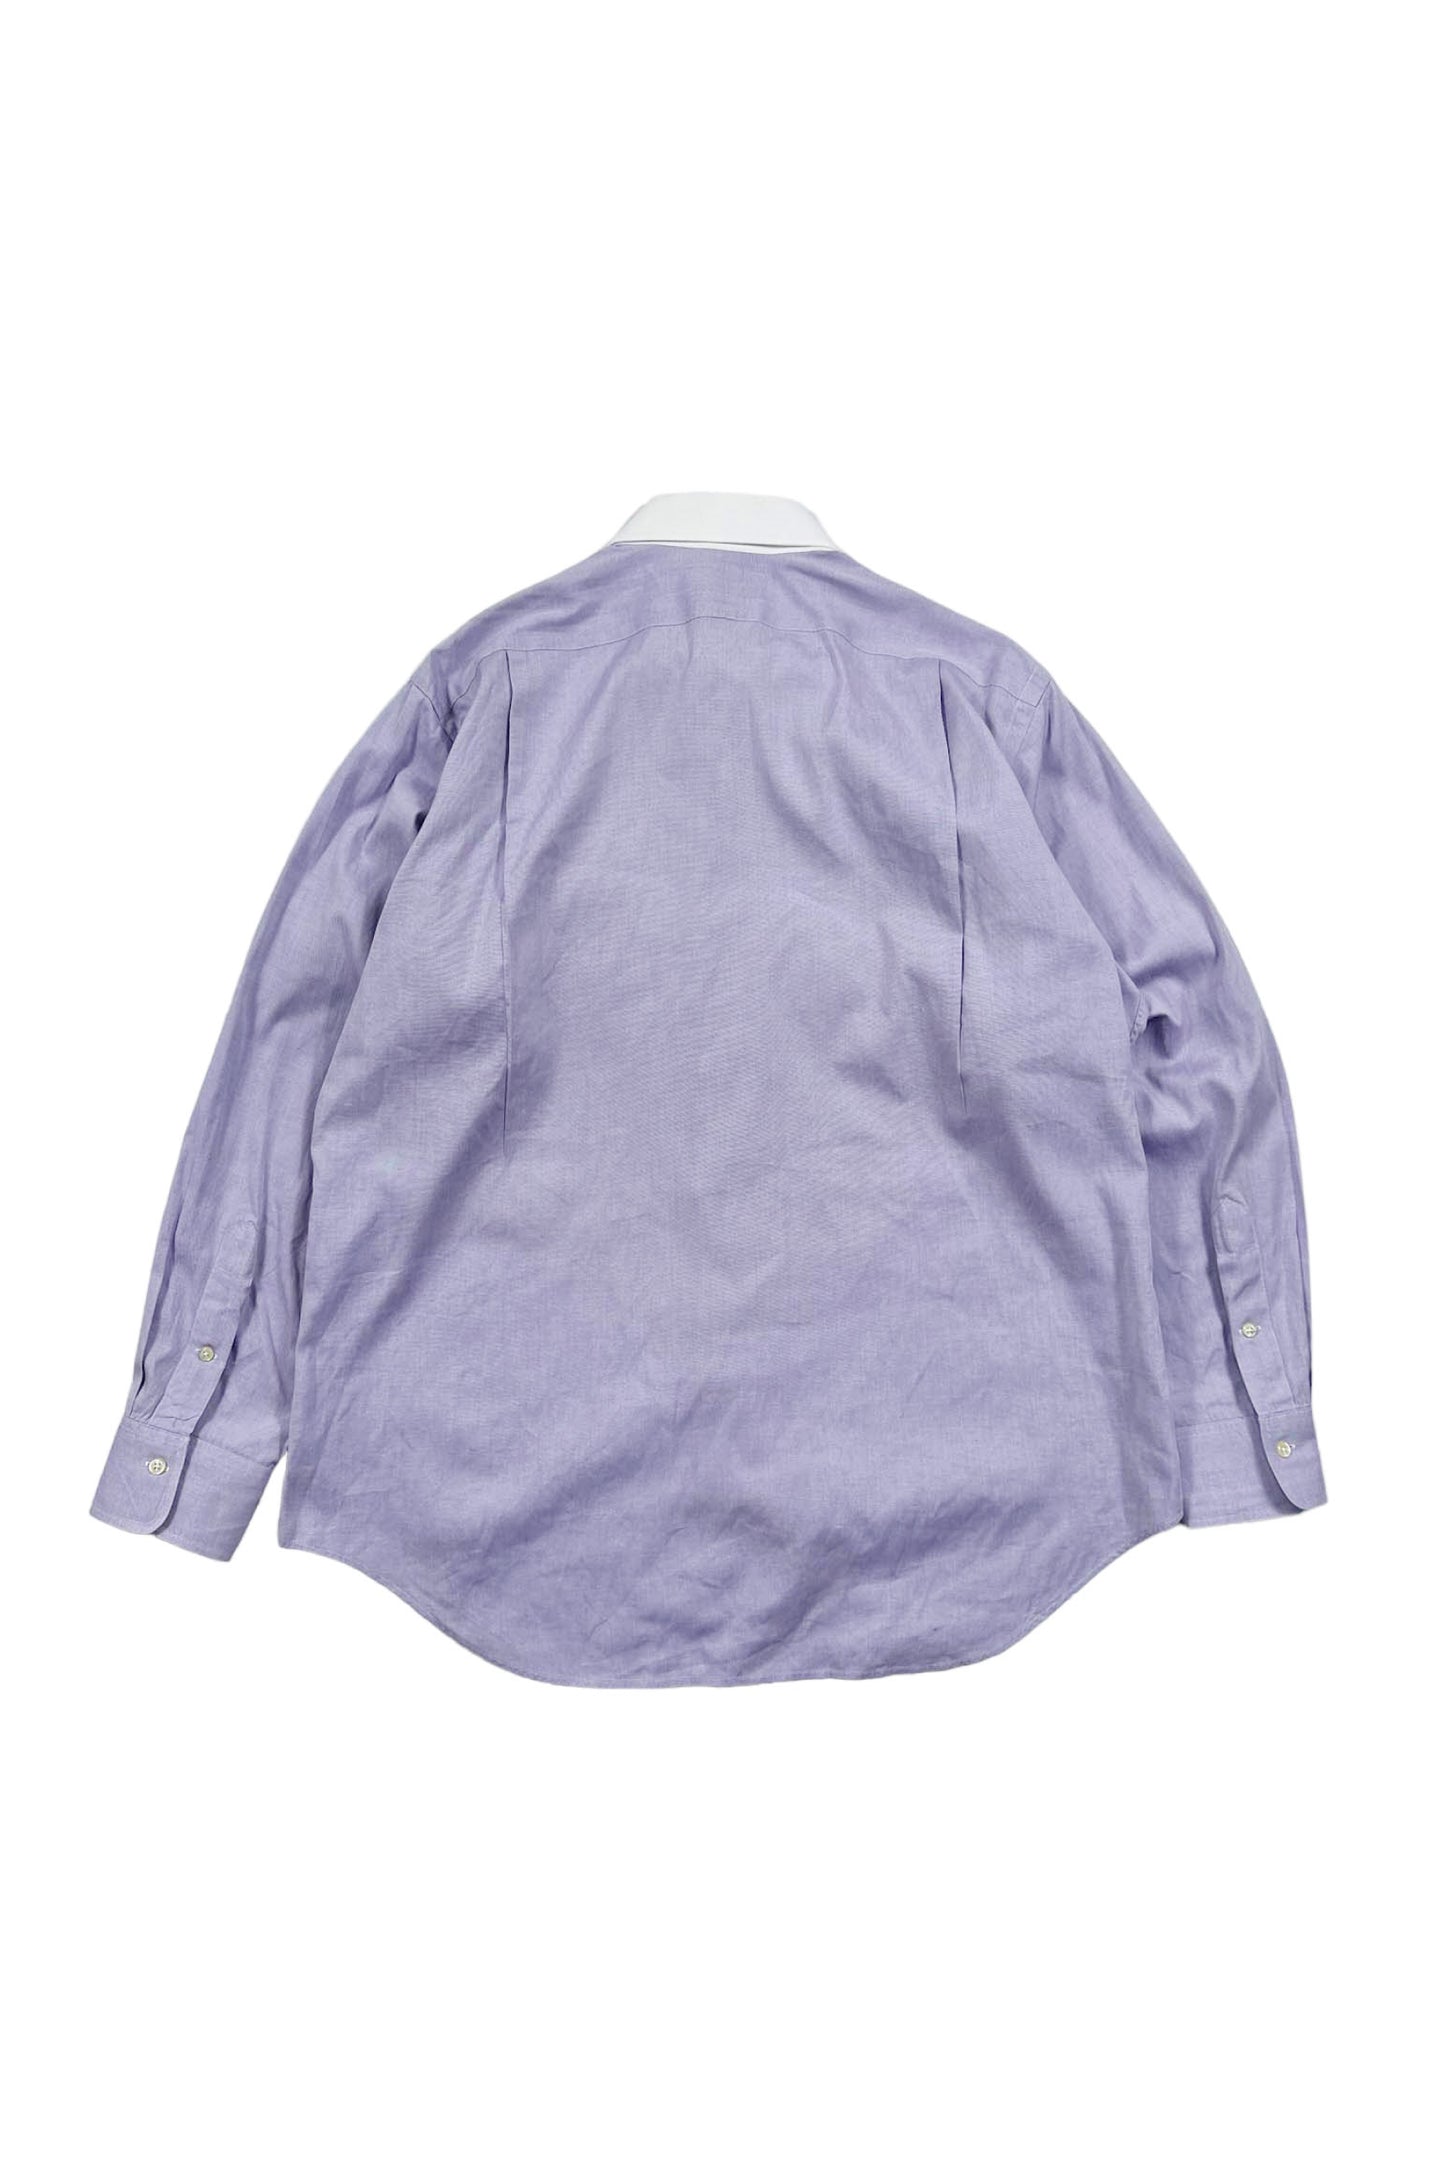 90's Polo by Ralph Lauren purple shirt